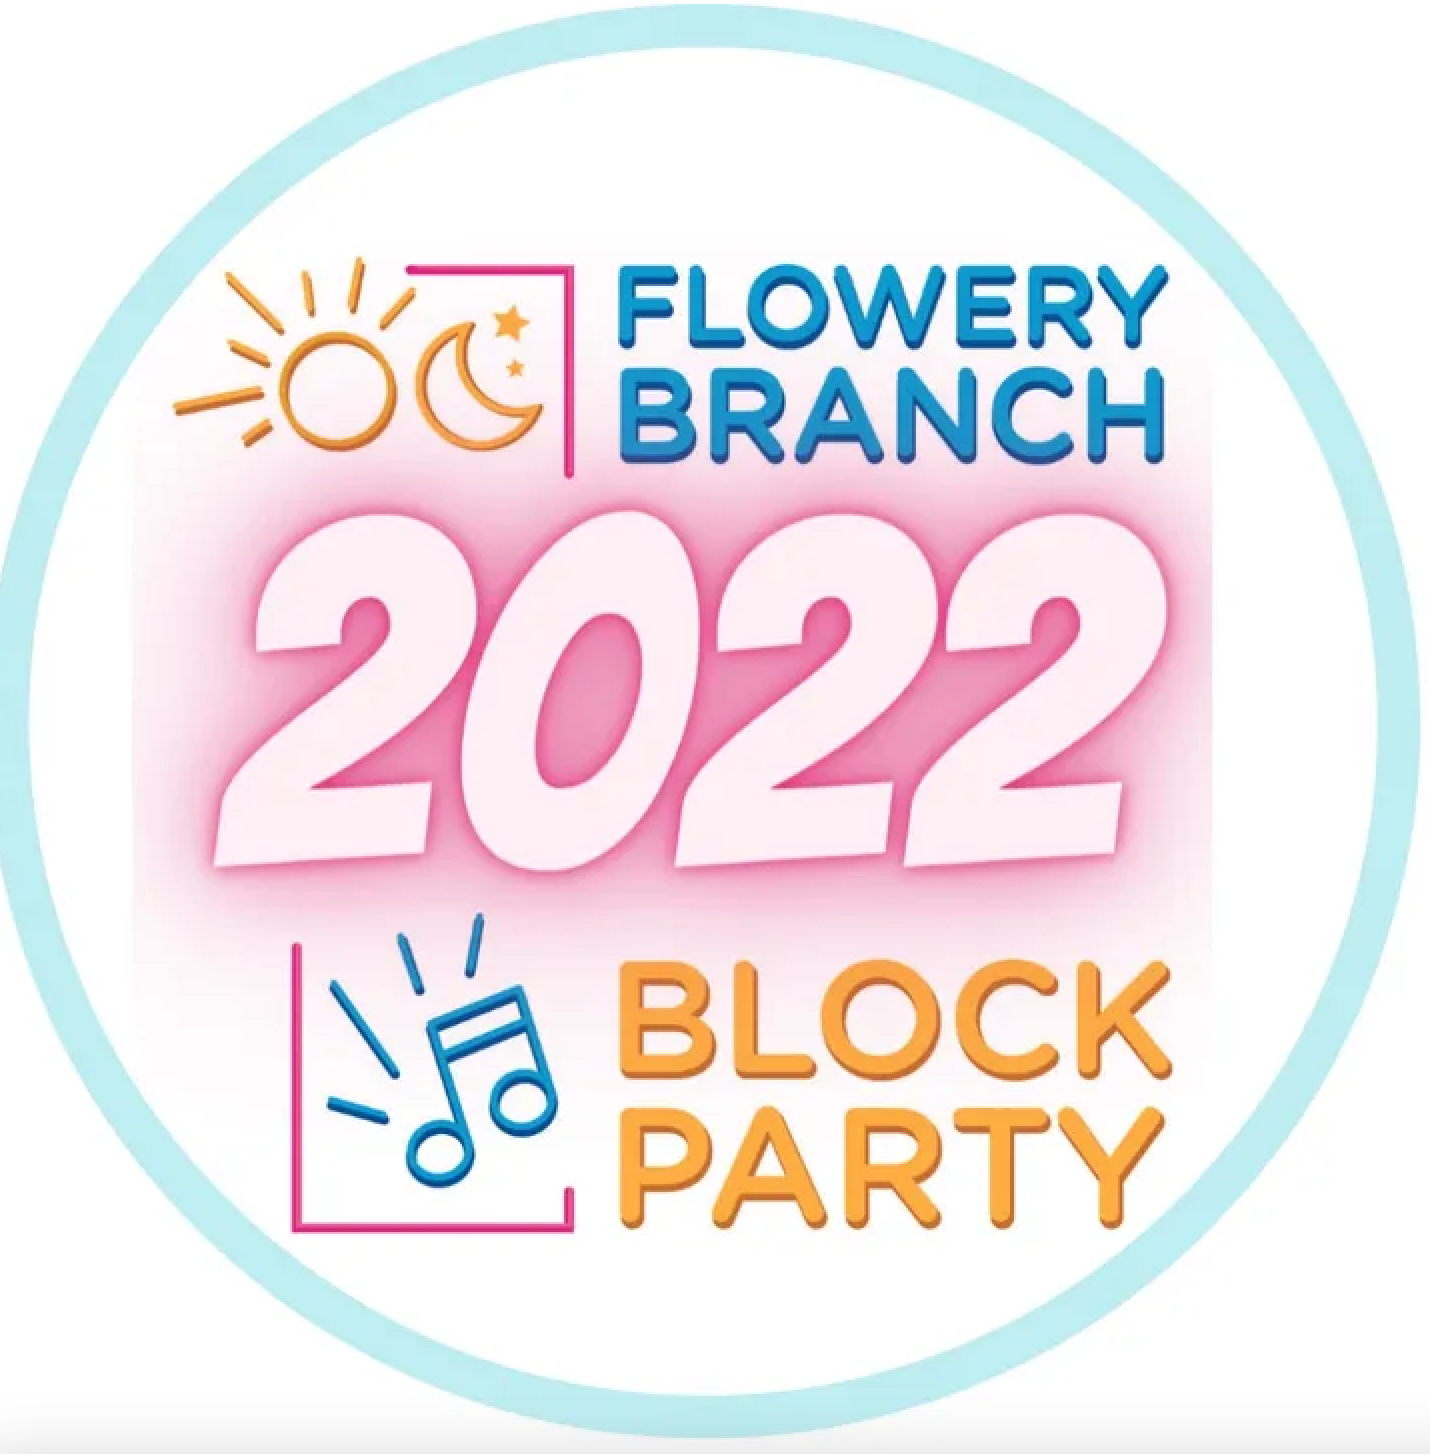 Flowery Branch 2022 Block Party Flowery Branch, GA